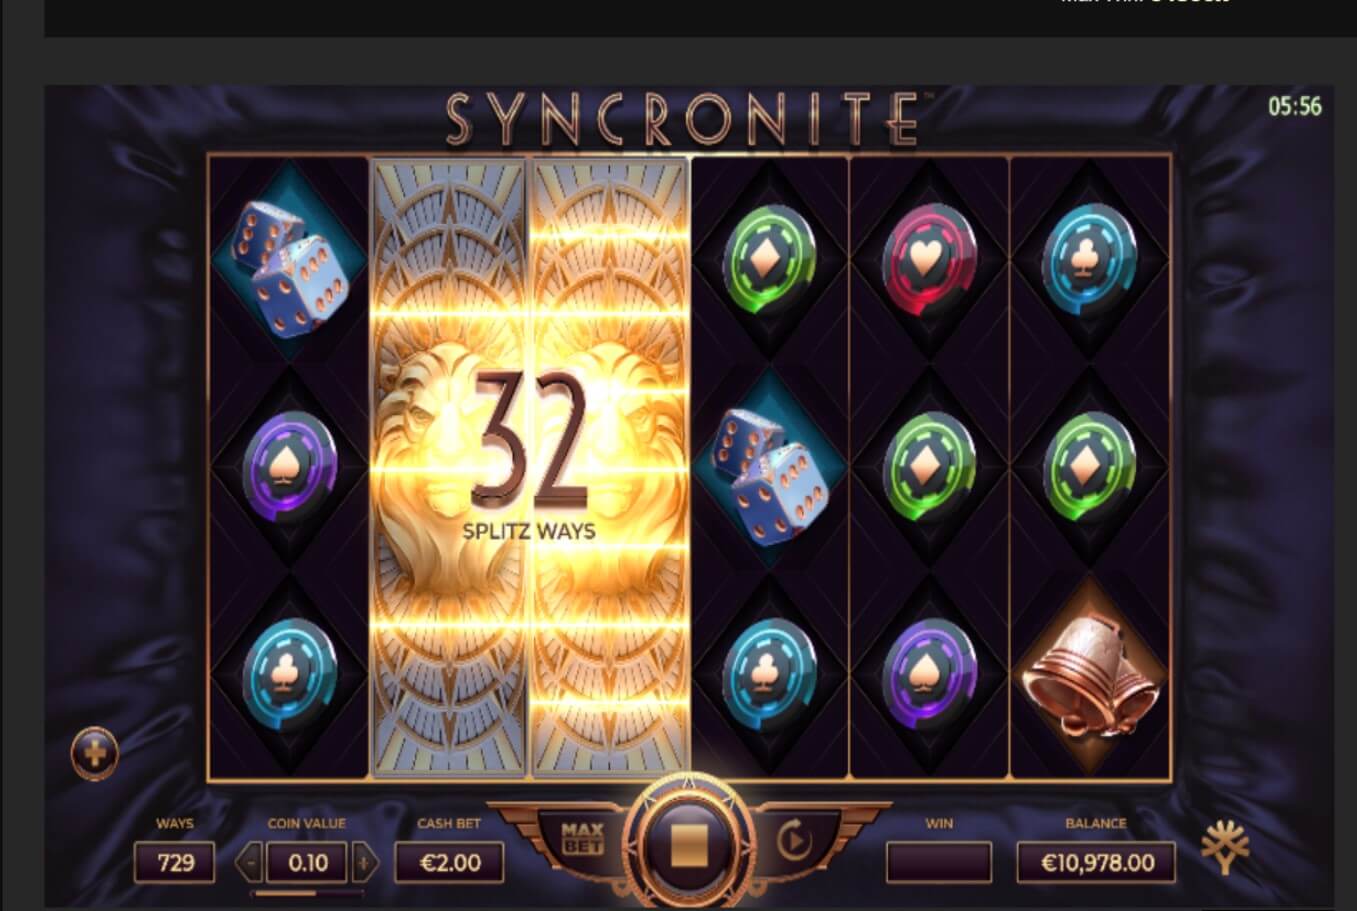 Syncronite Bonus